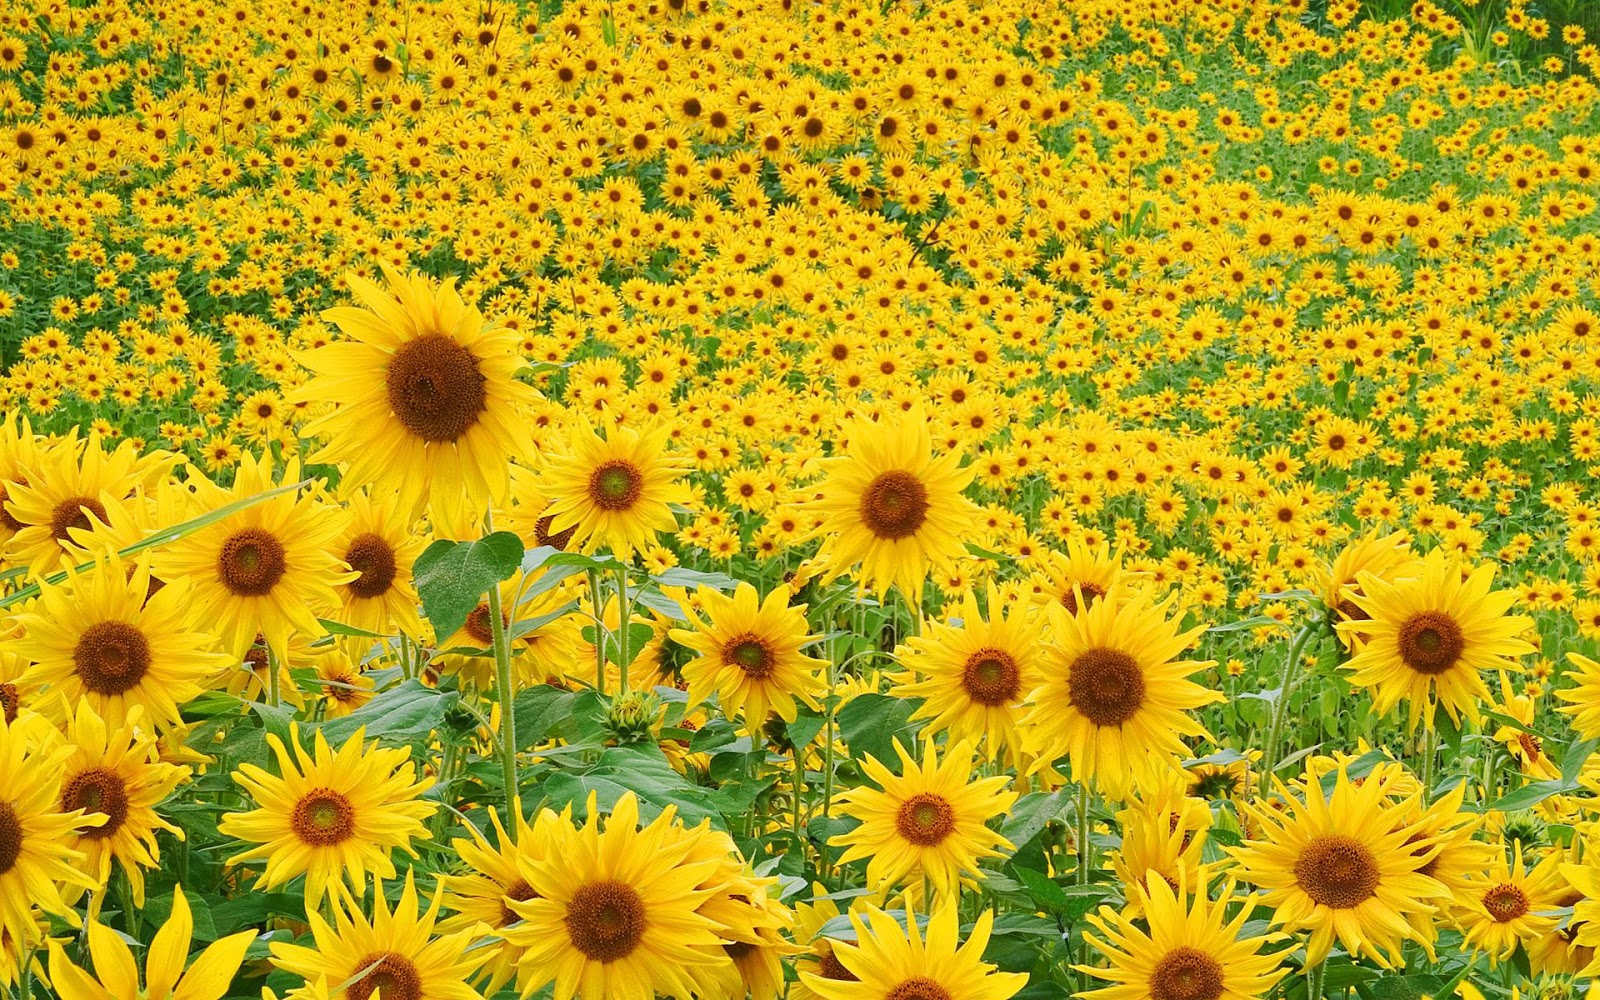 Sunflower wallpaper desktop Your Wallpaper Images Free